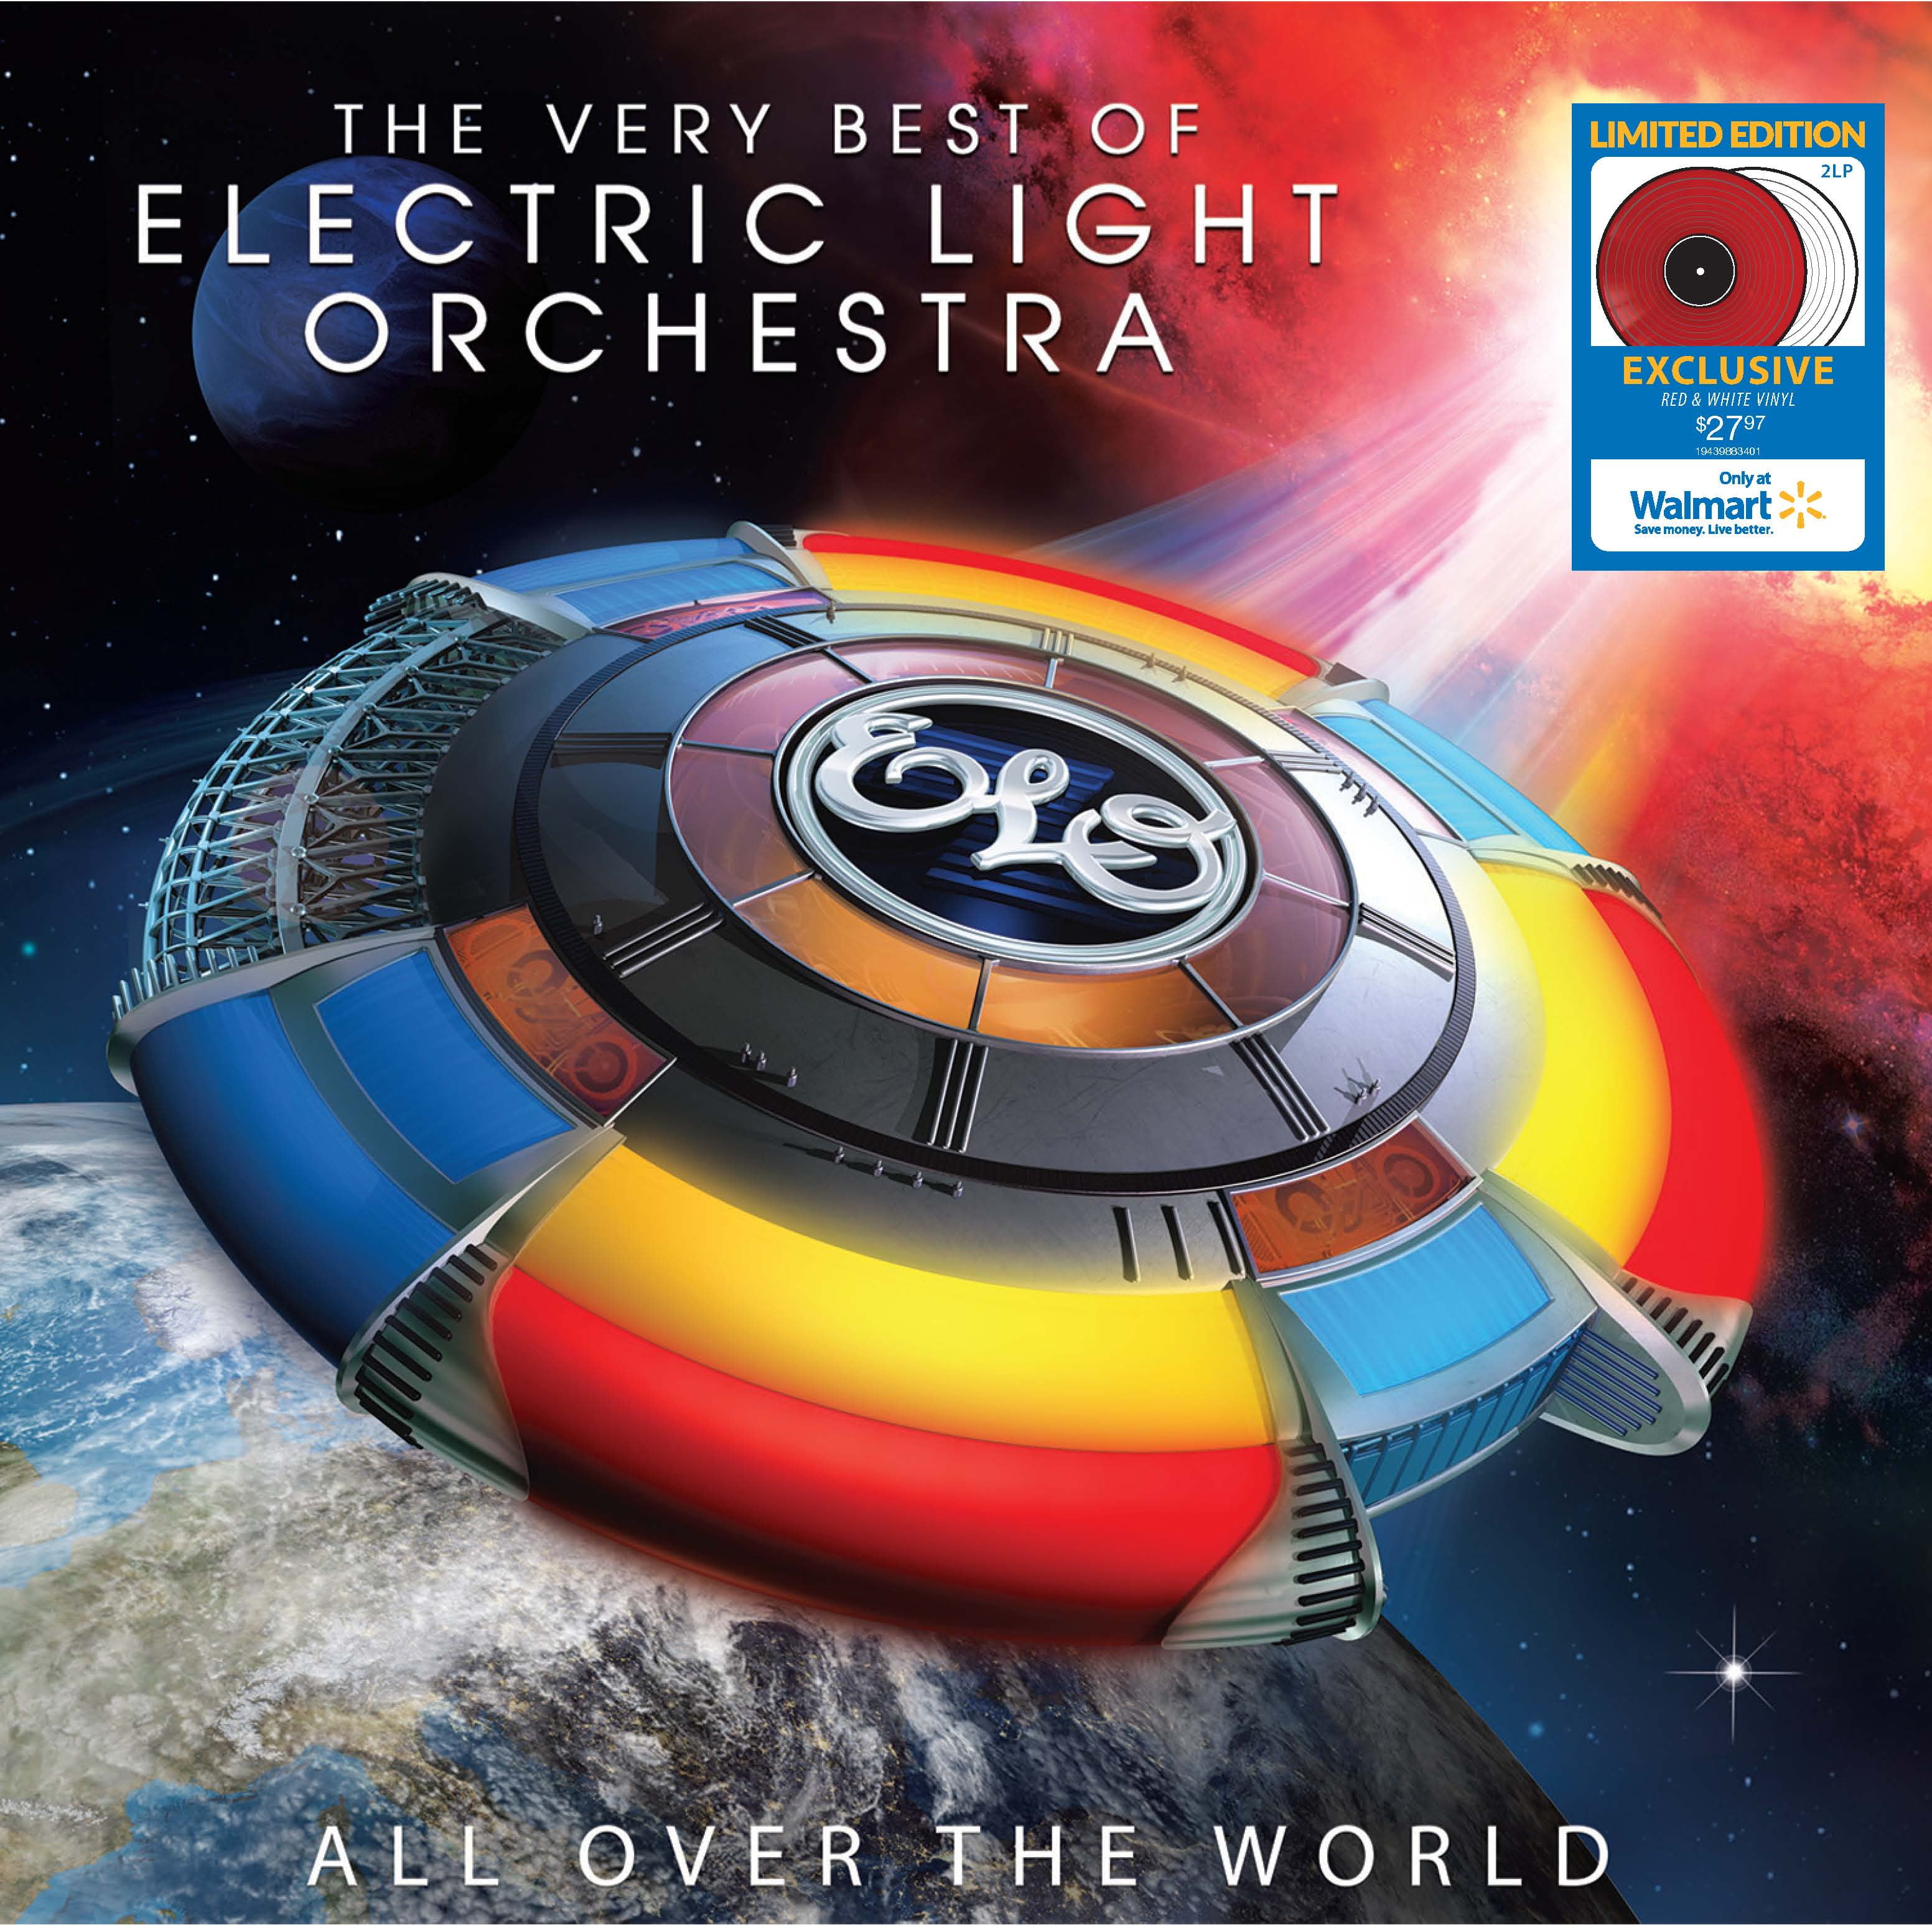 Elo electric light orchestra. Electric Light Orchestra дискография. Electric Light Orchestra обложка. Electric Light Orchestra Electric Light Orchestra 1971. Electric Light Orchestra пластинки.